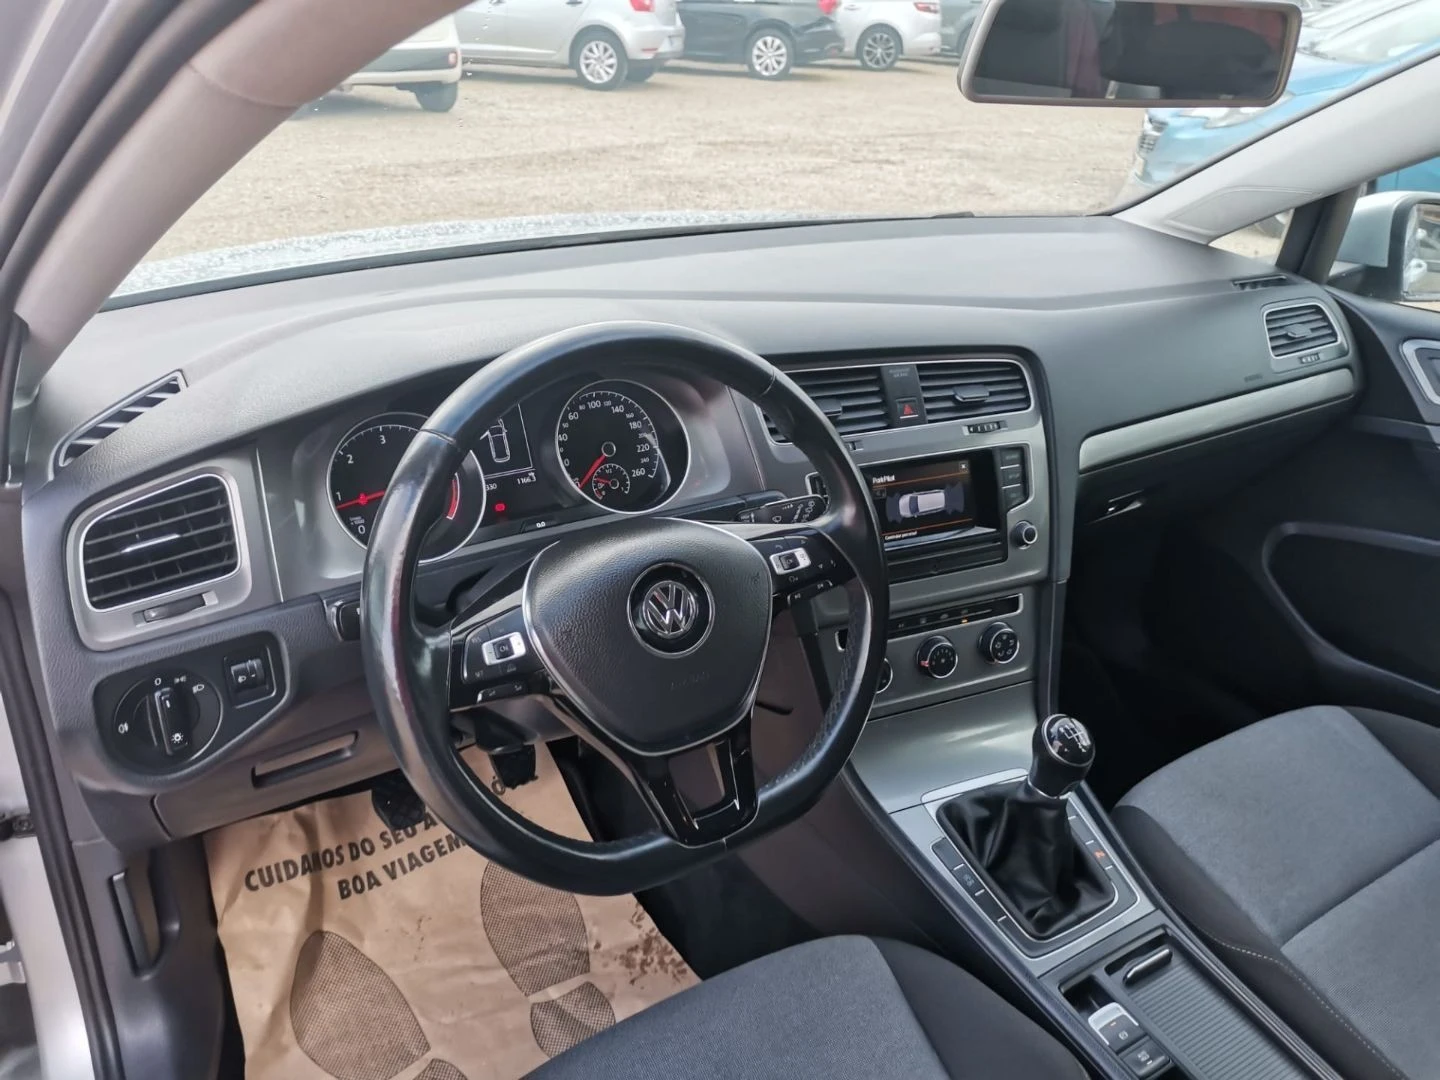 VW Golf Variant 1.6 TDI BLUEMOTION